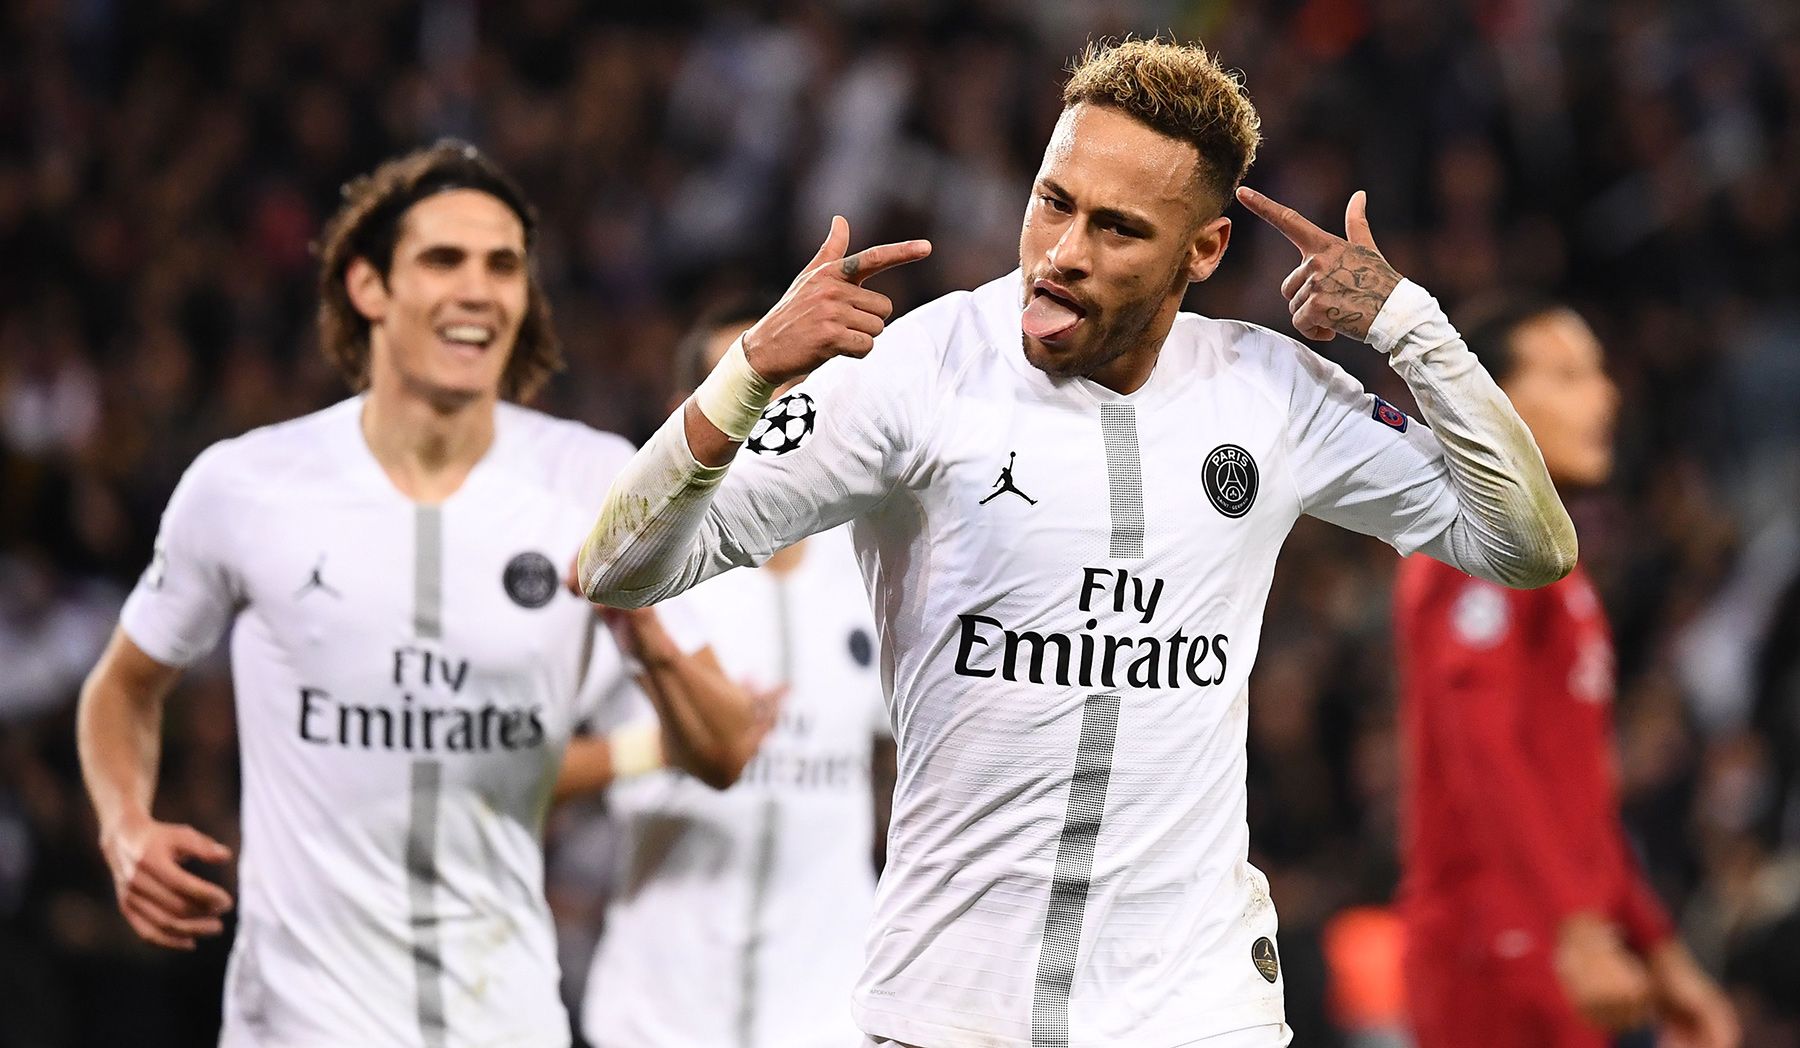 Neymar Jr, celebrating a goal scored with the PSG near Cavani